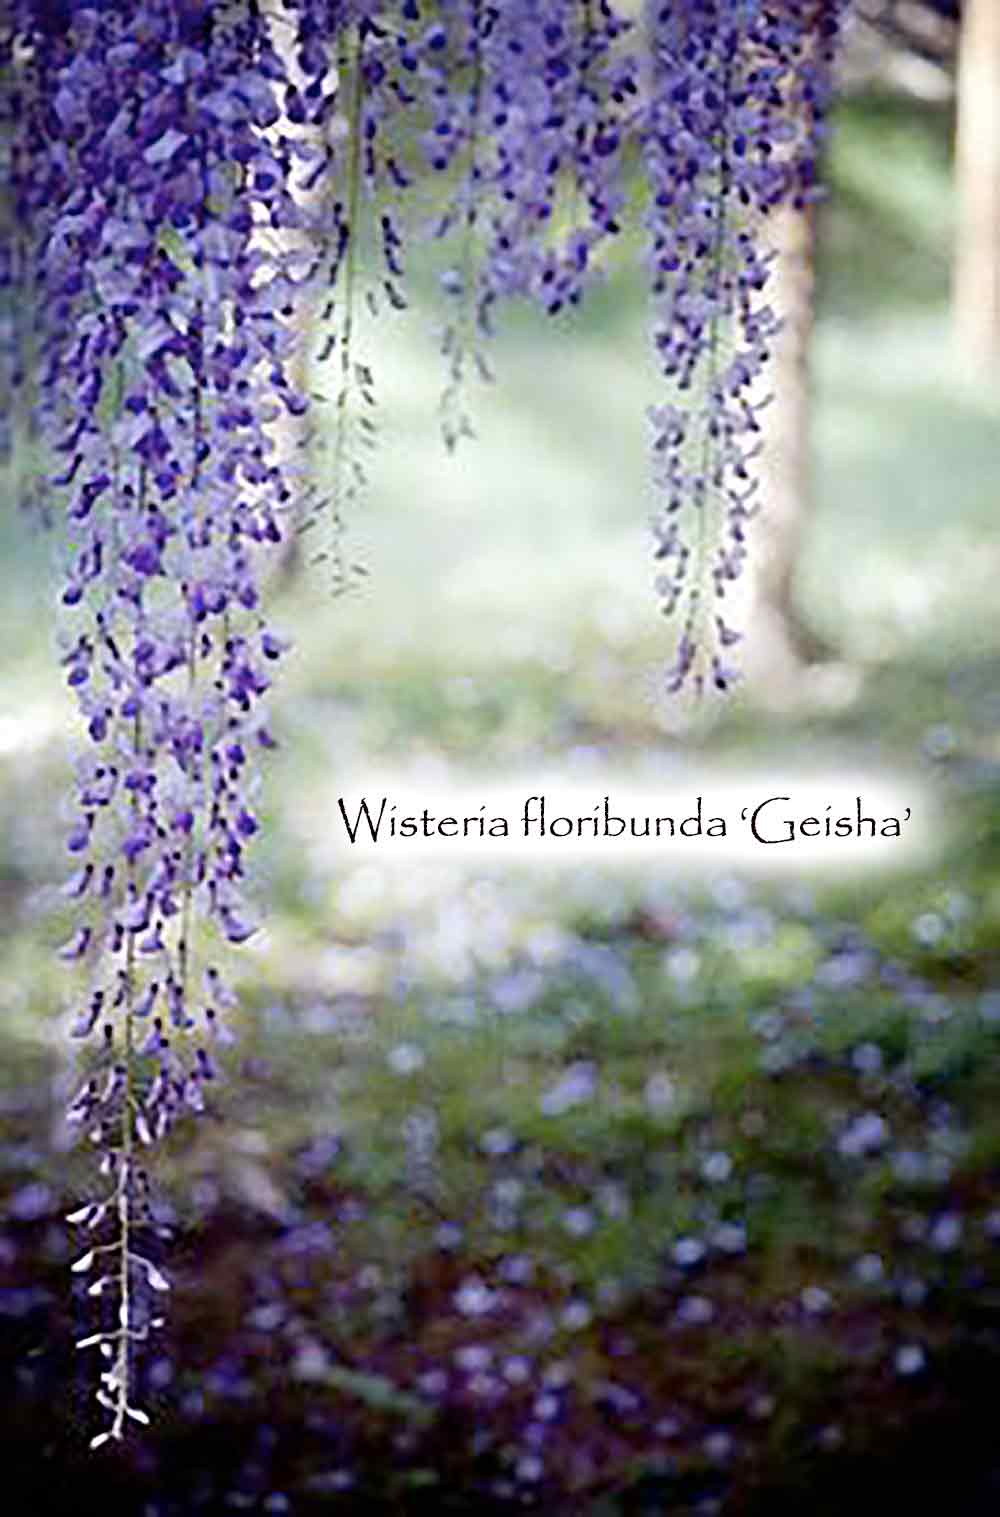 Wisteria floribunda 'Geisha' (Japanese Wisteria)